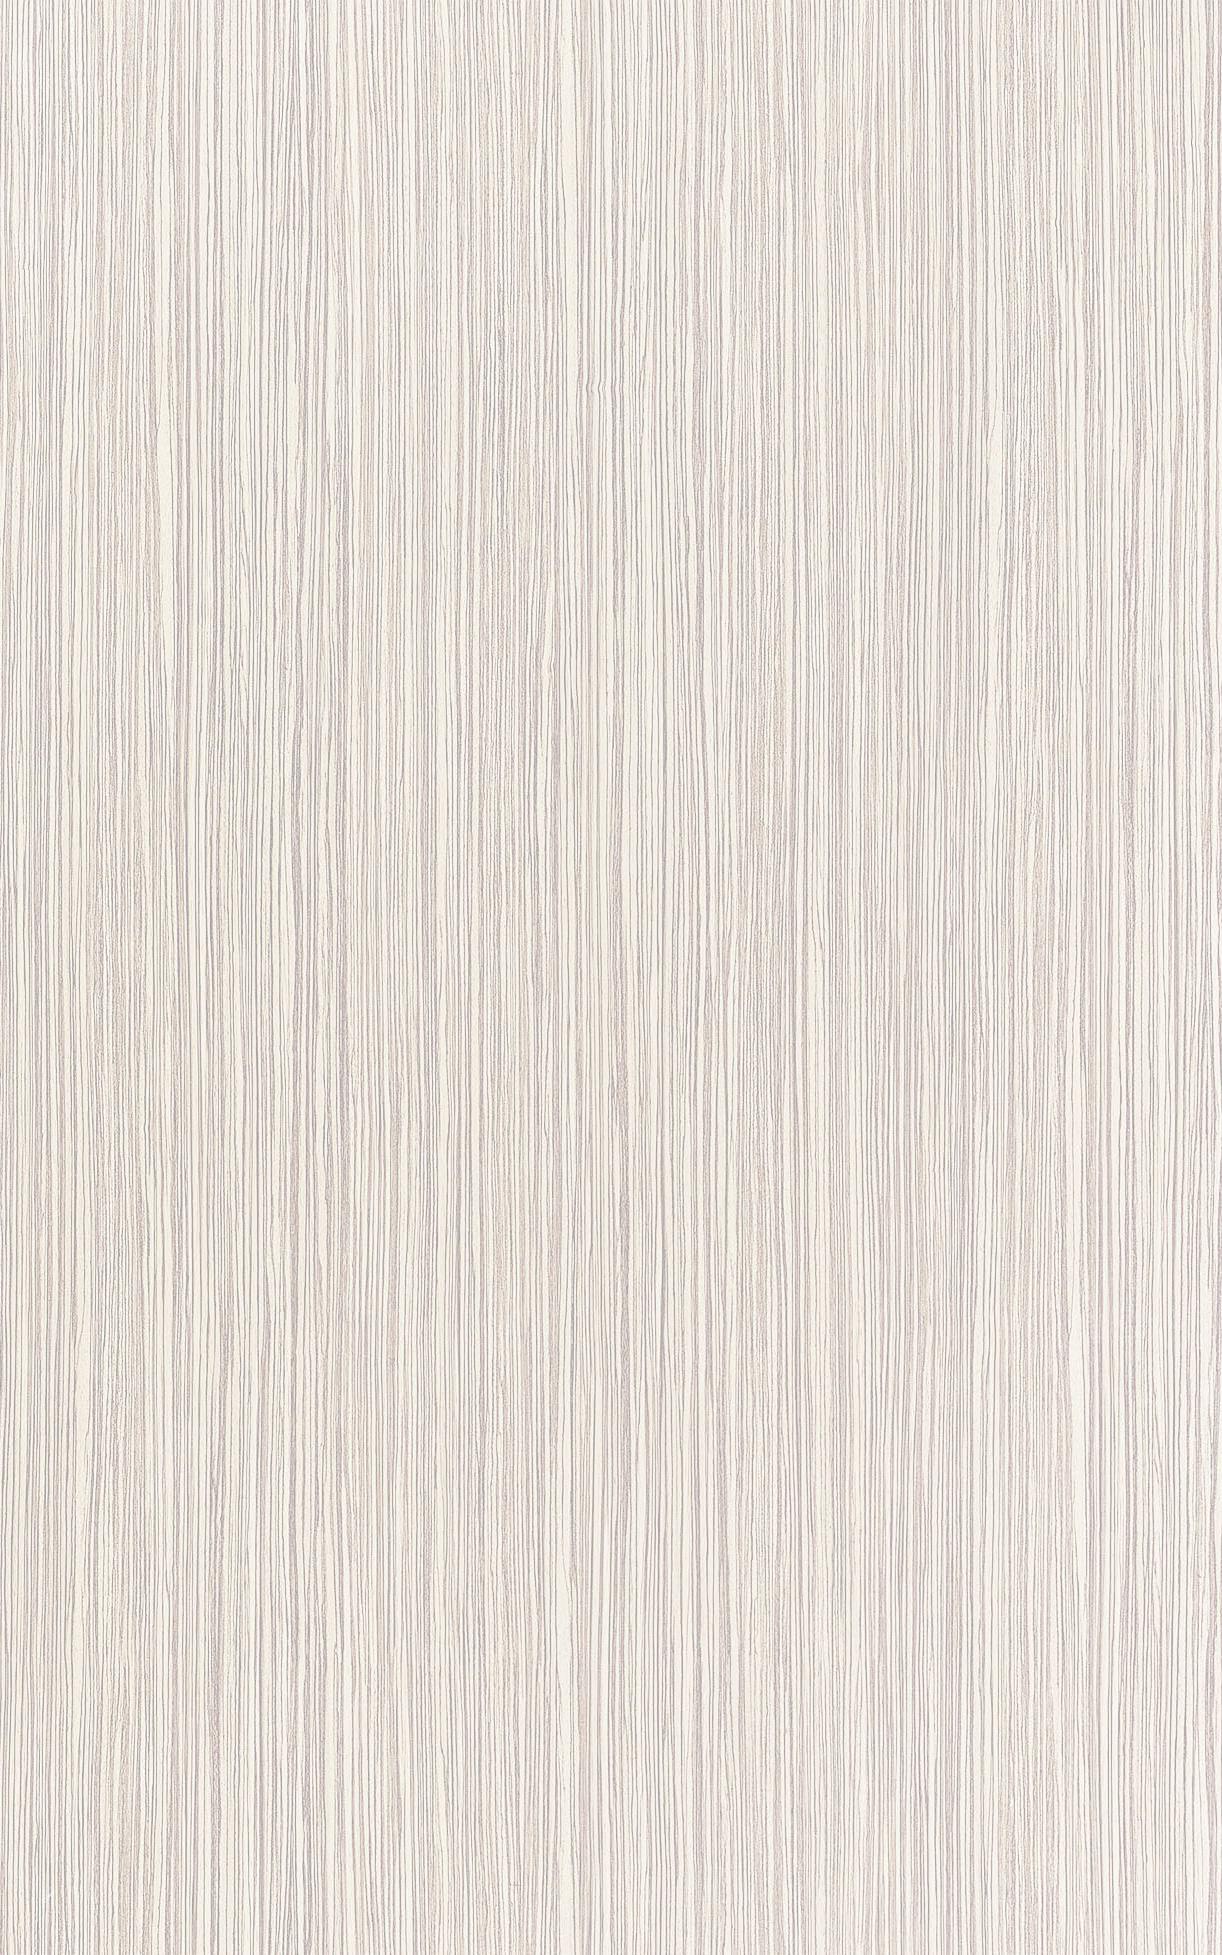 Плитка Cypress blanco 40x25